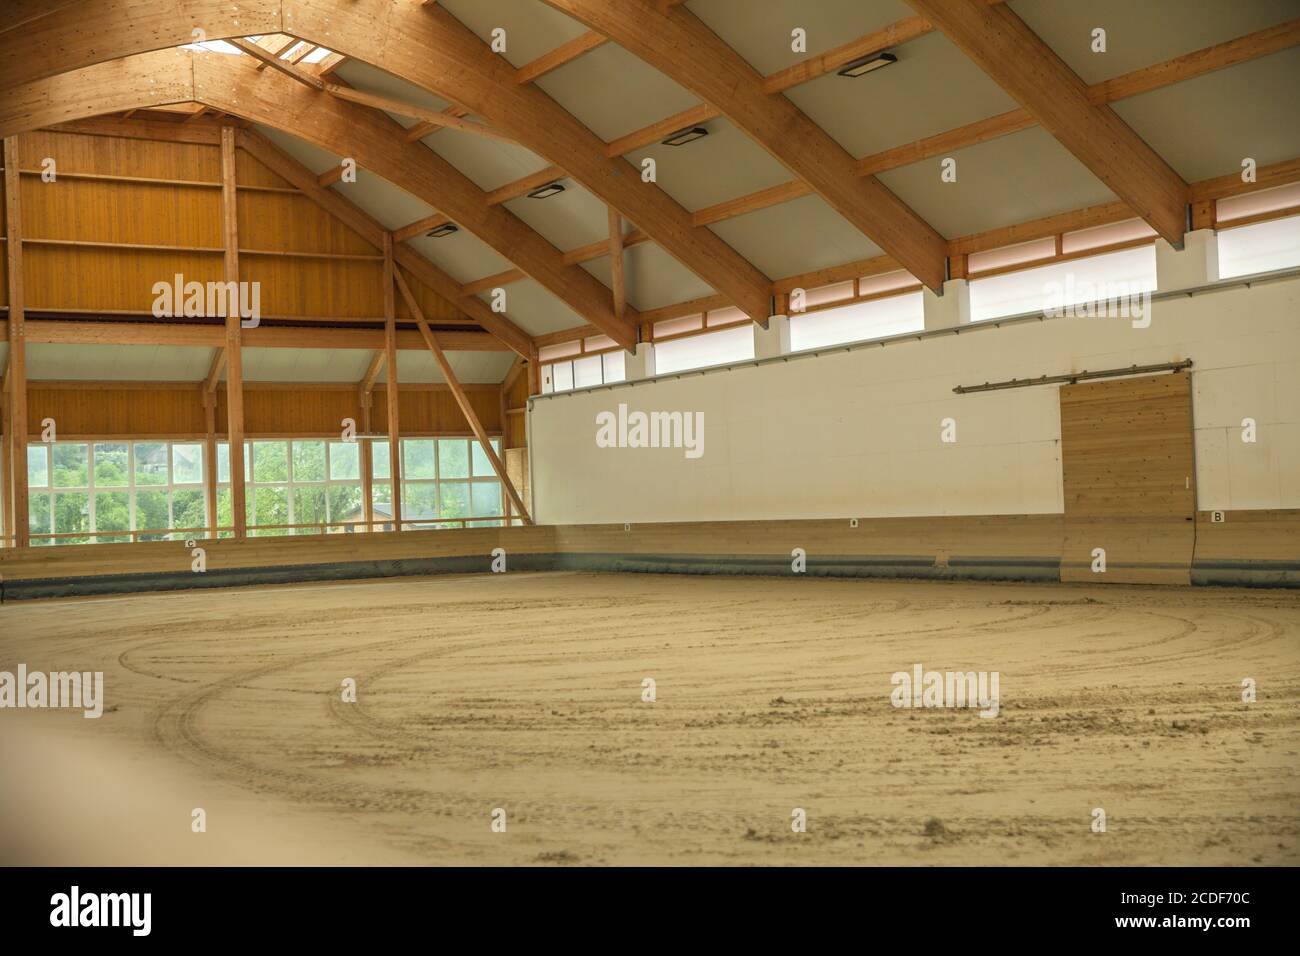 Empty indoor horse riding arena Stock Photo